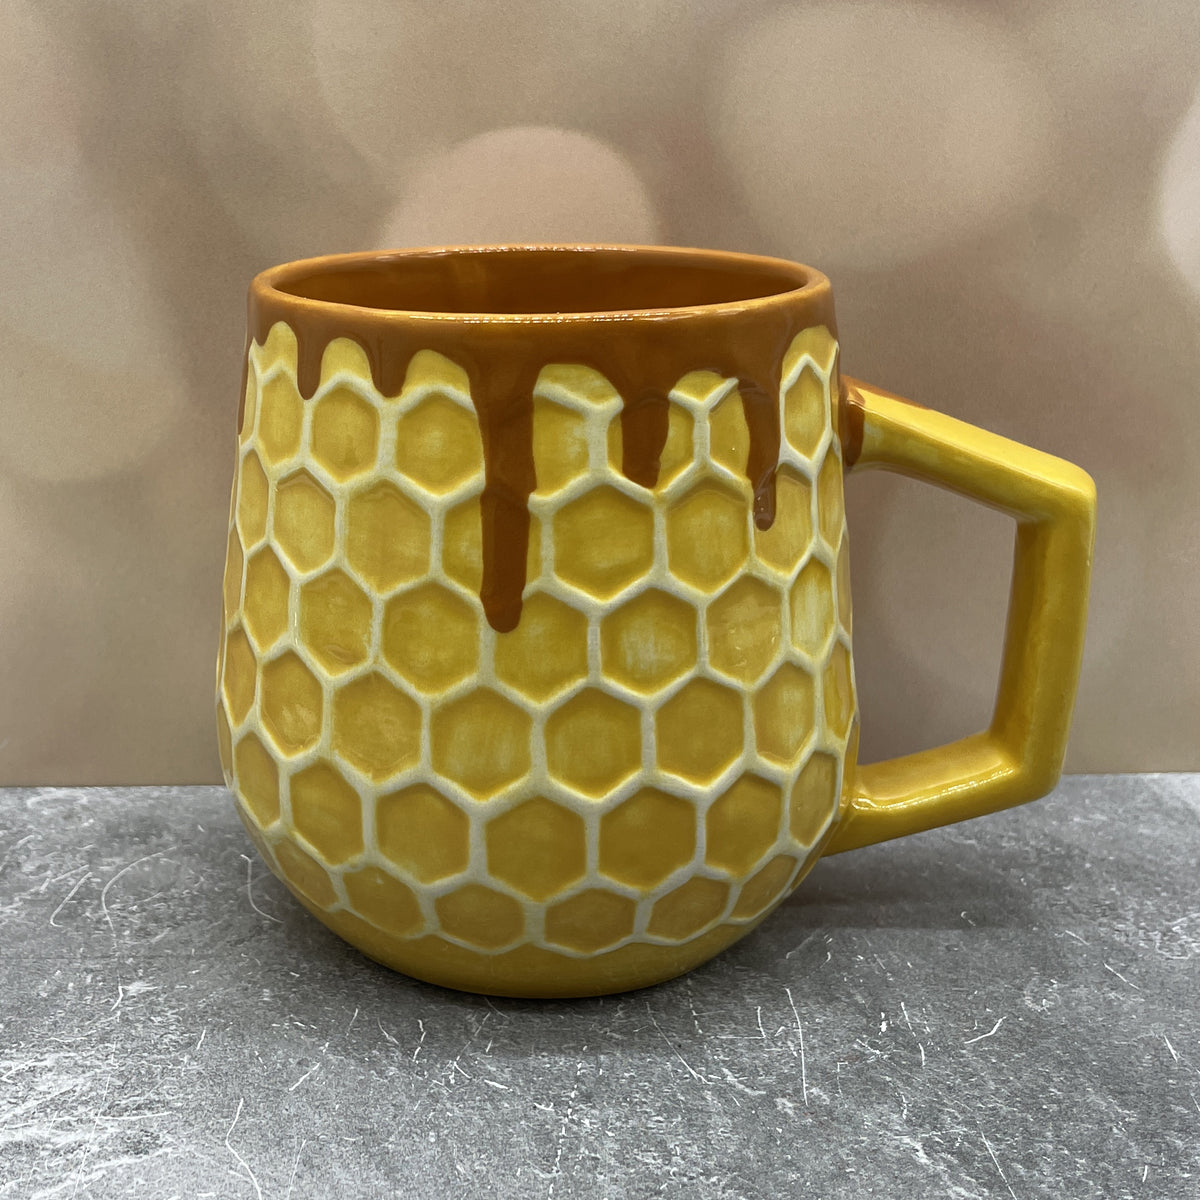 Honeycomb Mug